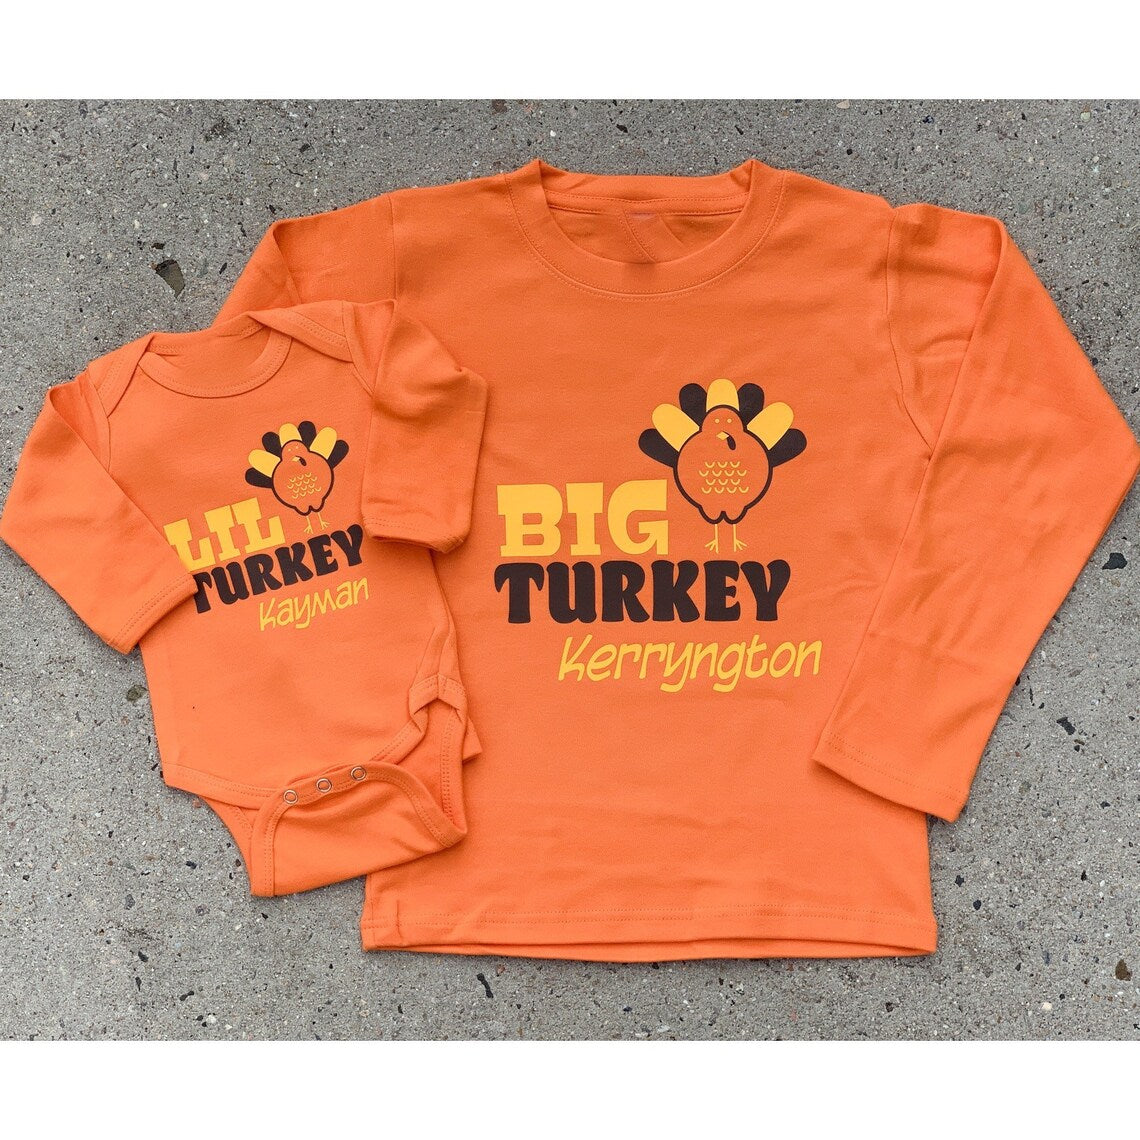 Thanksgiving Turkey matching BIG LIL sibling shirts for kids